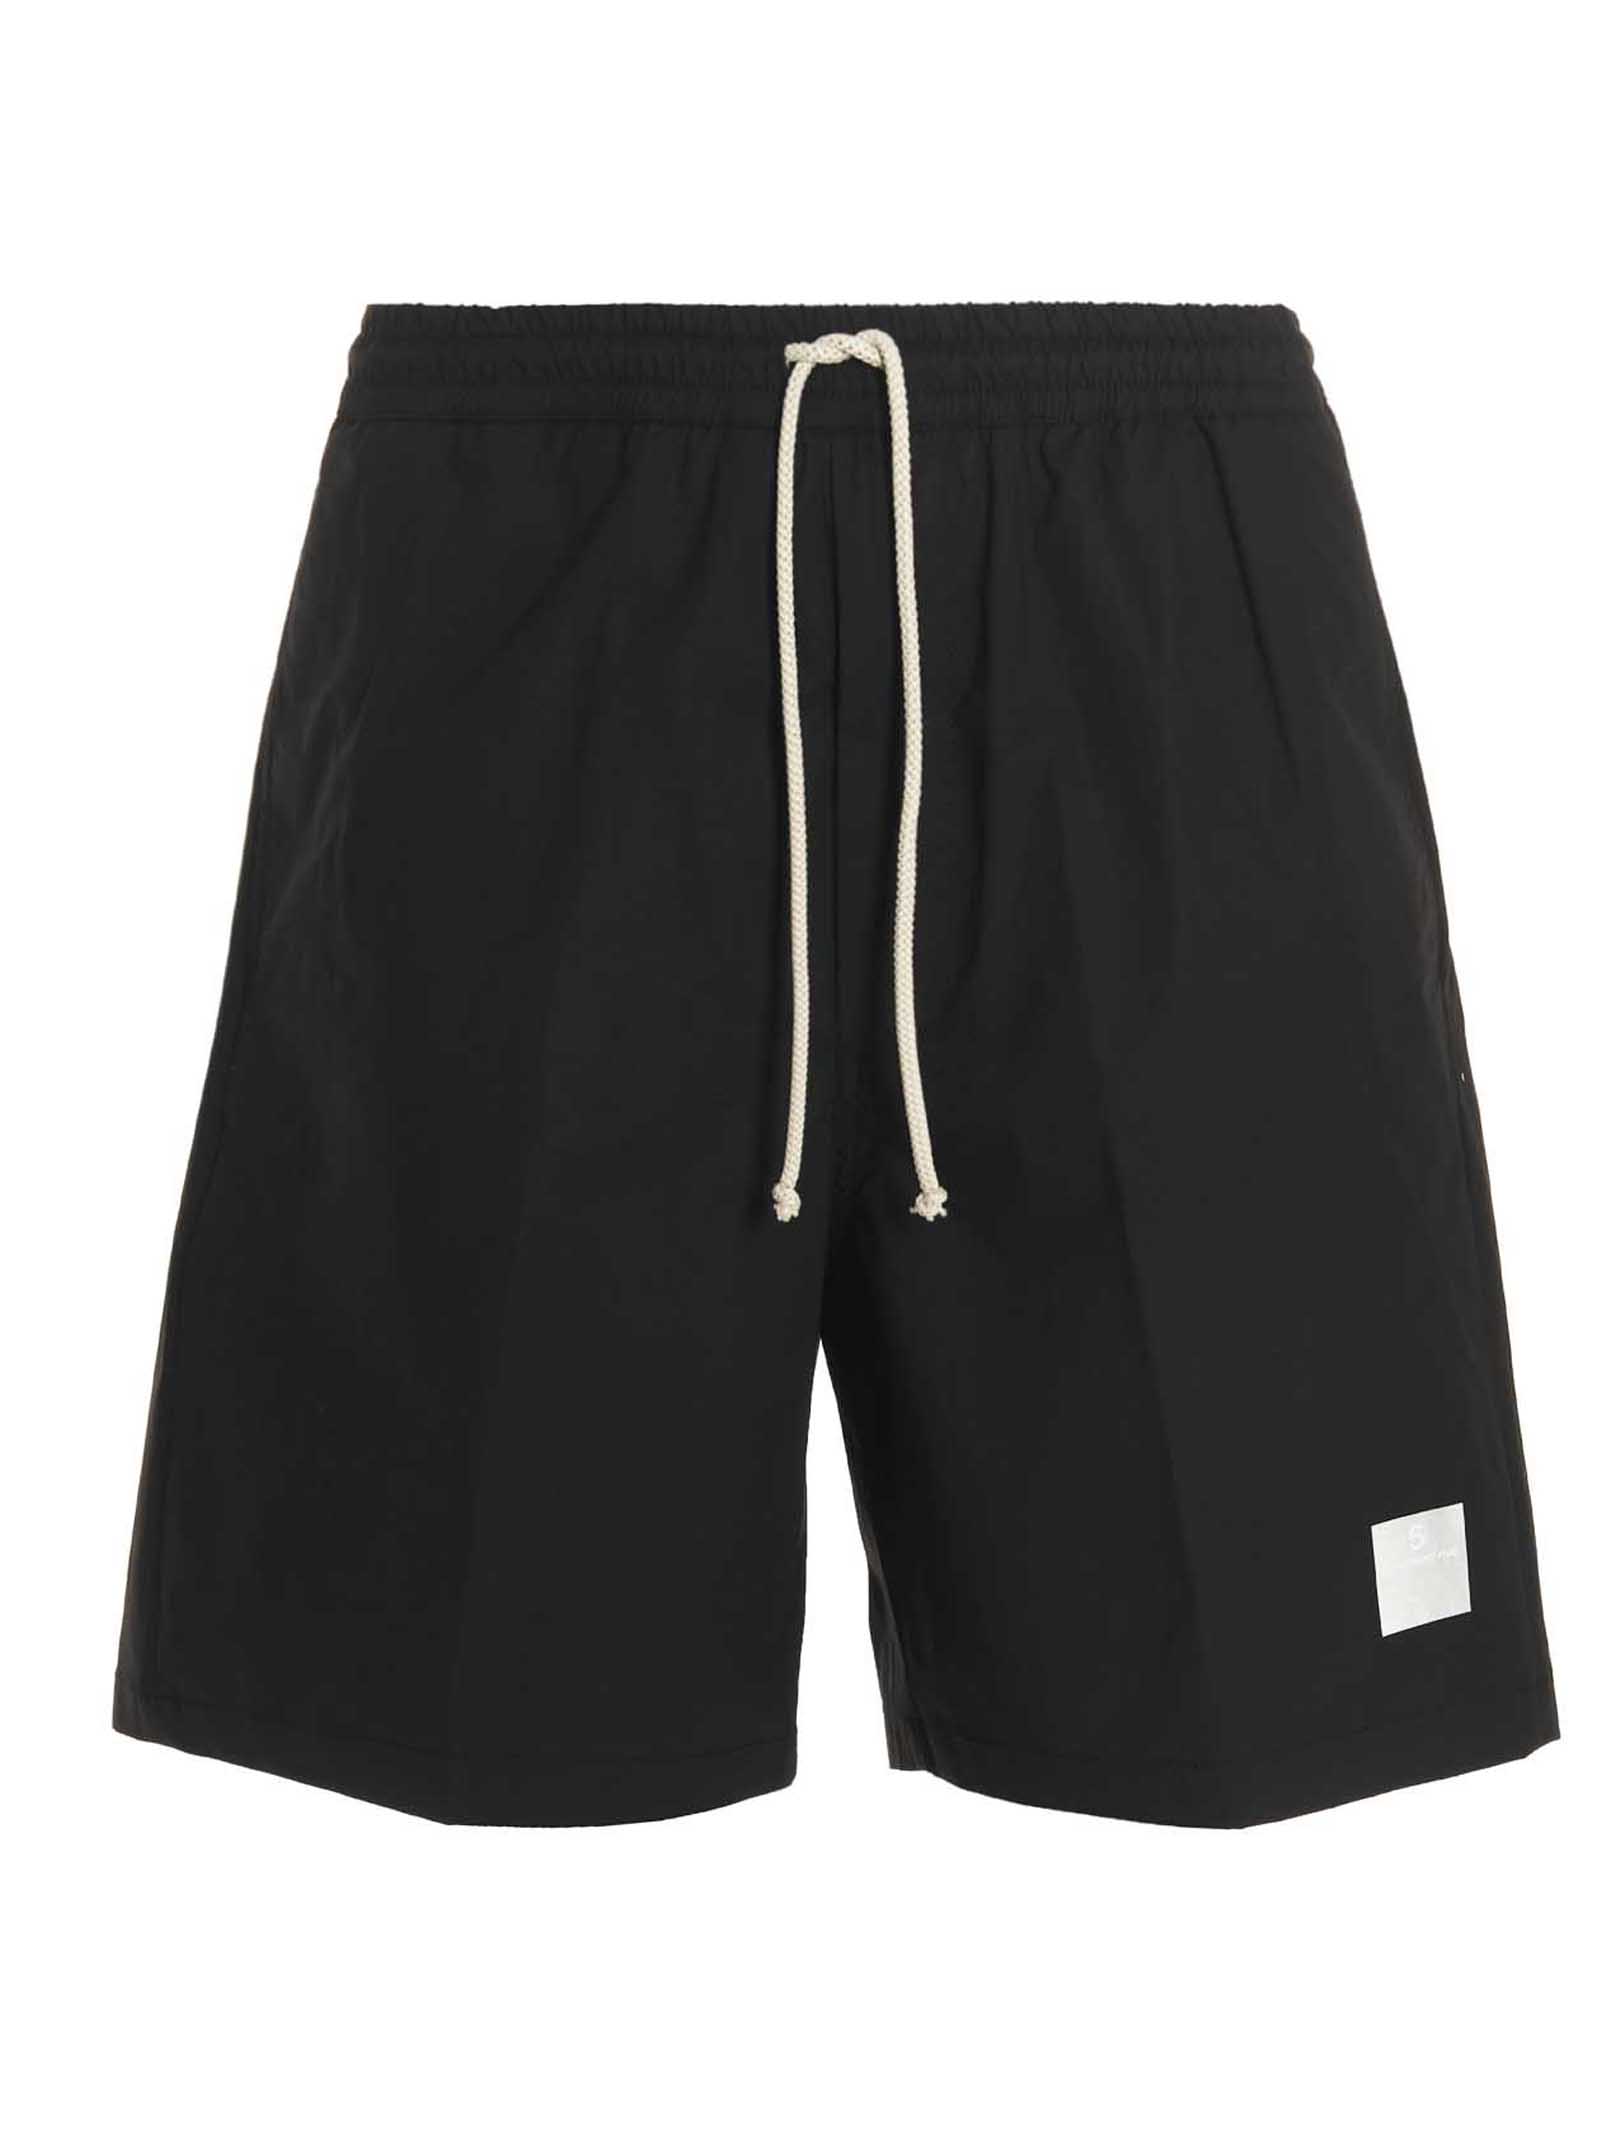 Department Five collins Bermuda Shorts